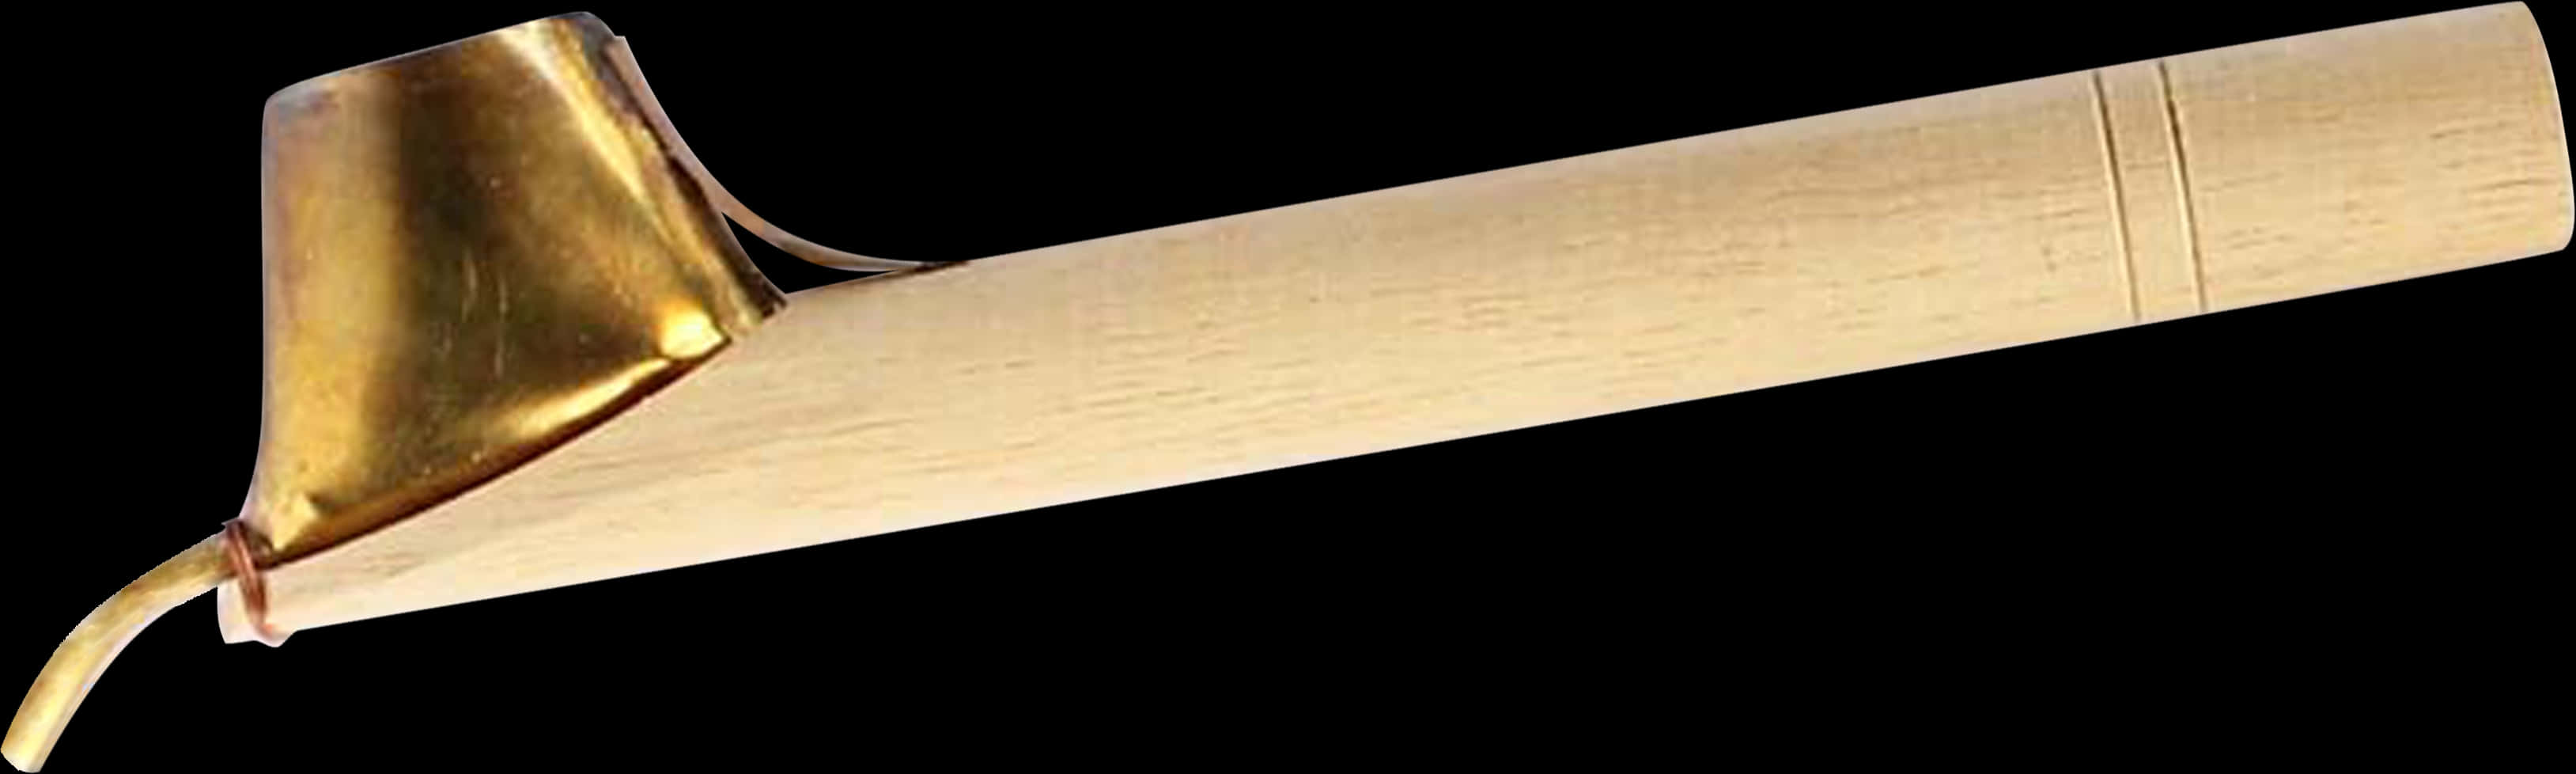 A Close-up Of A Wooden Stick